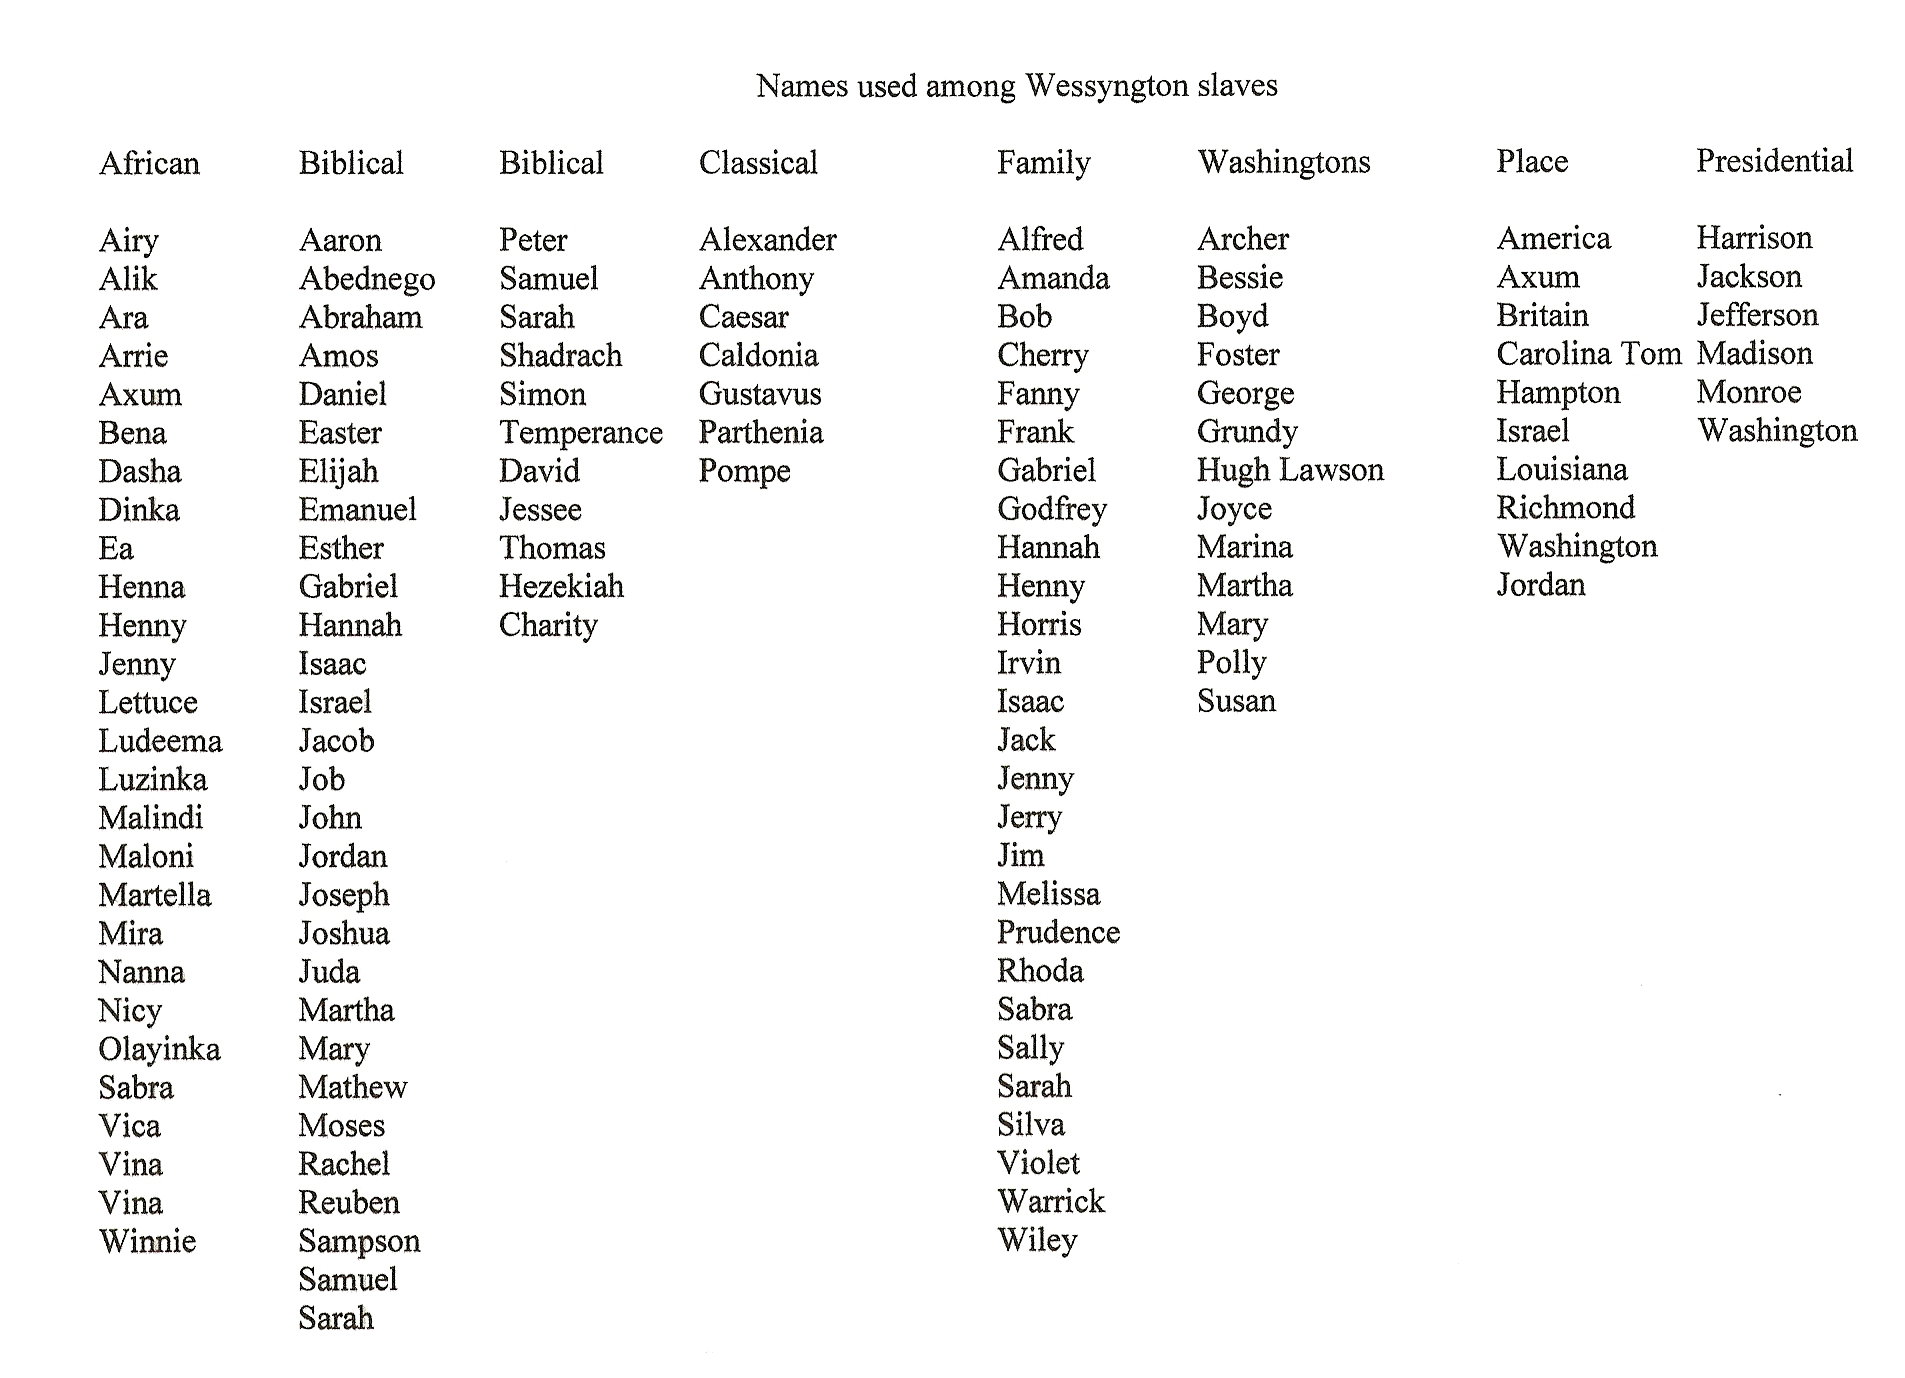 ativan common names in the 1800s